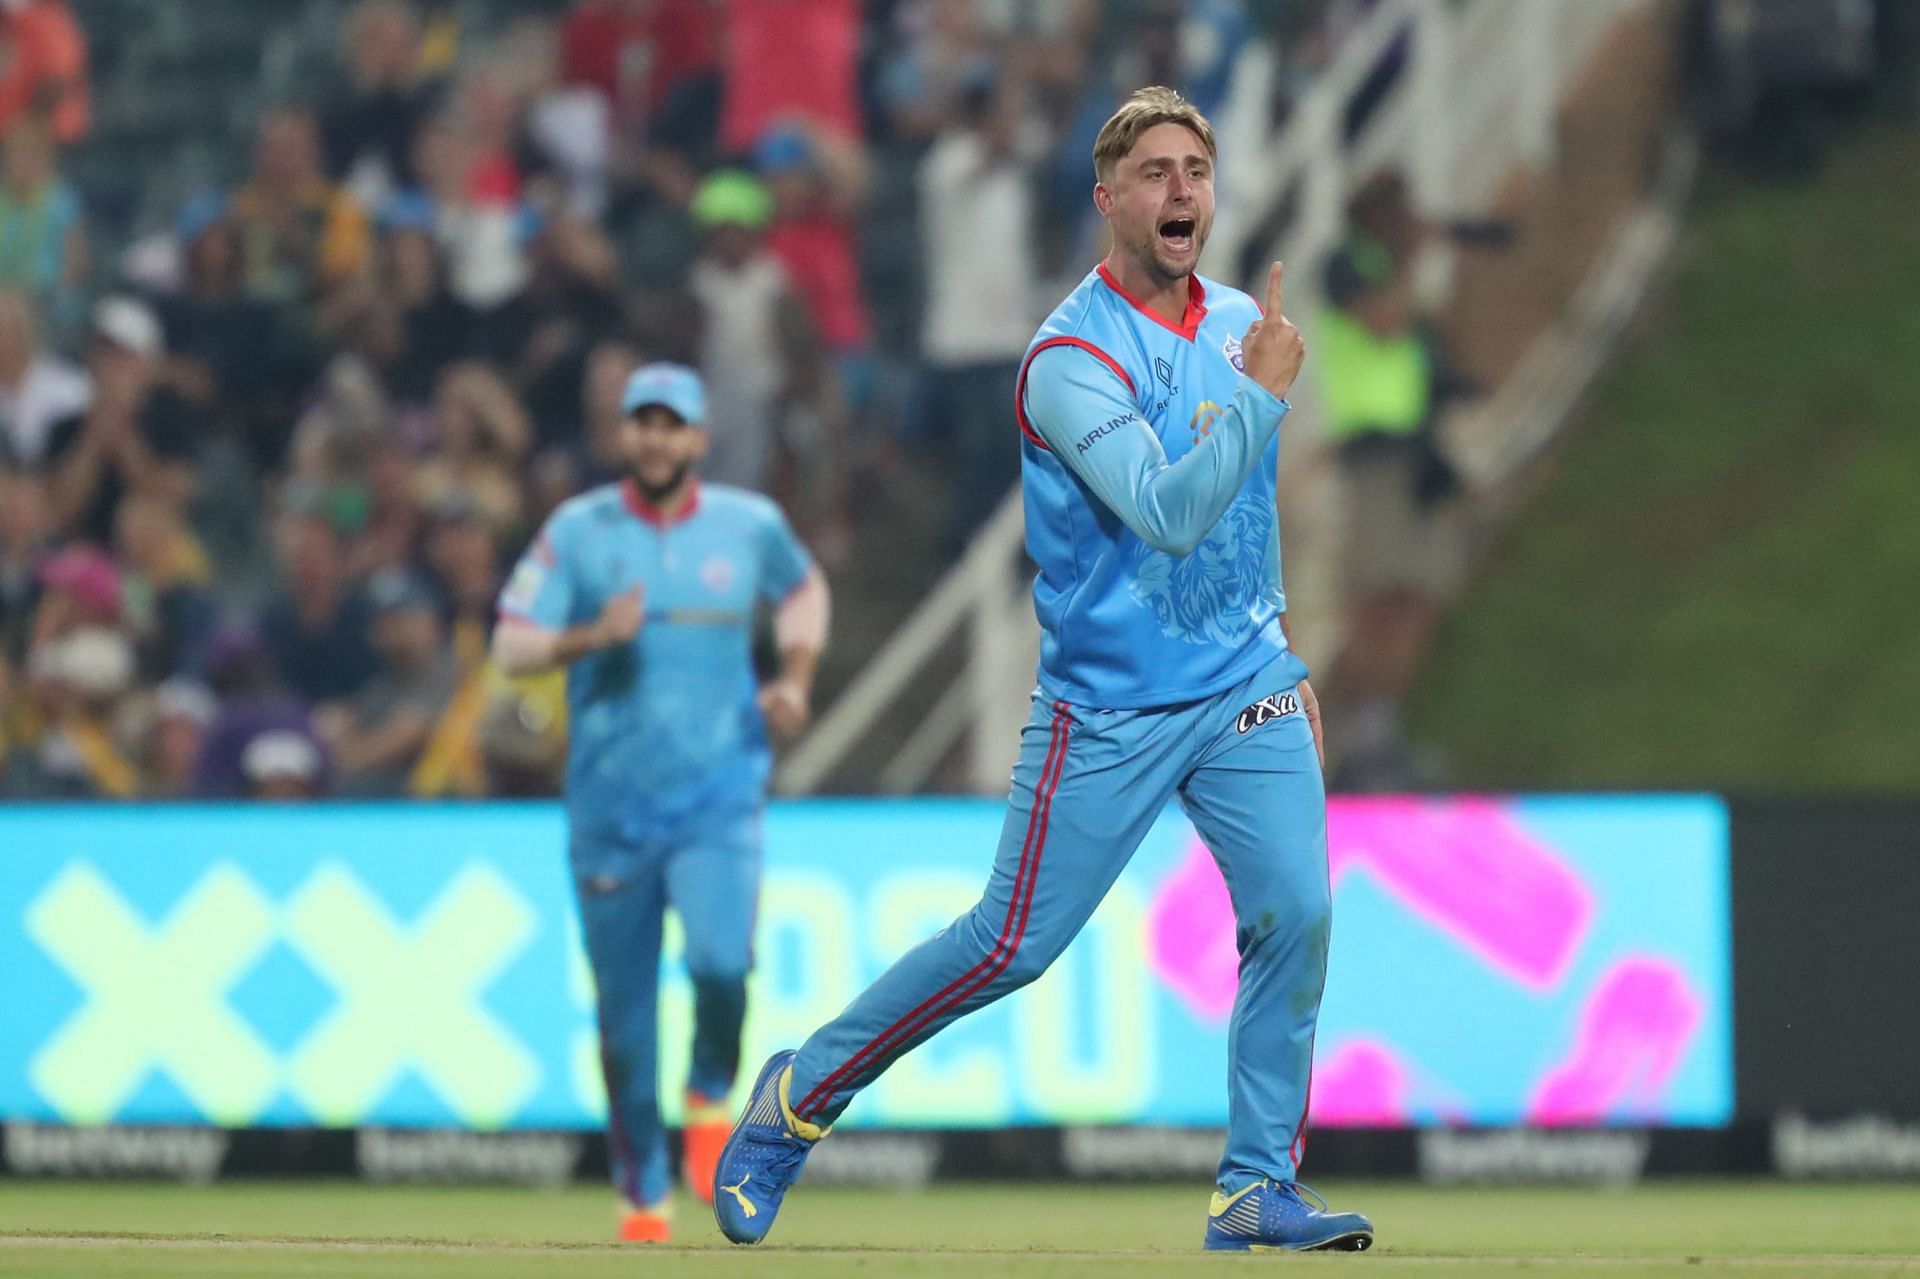 Will Jacks celebrating a wicket (Credits: X/PretoriaCapsSA)